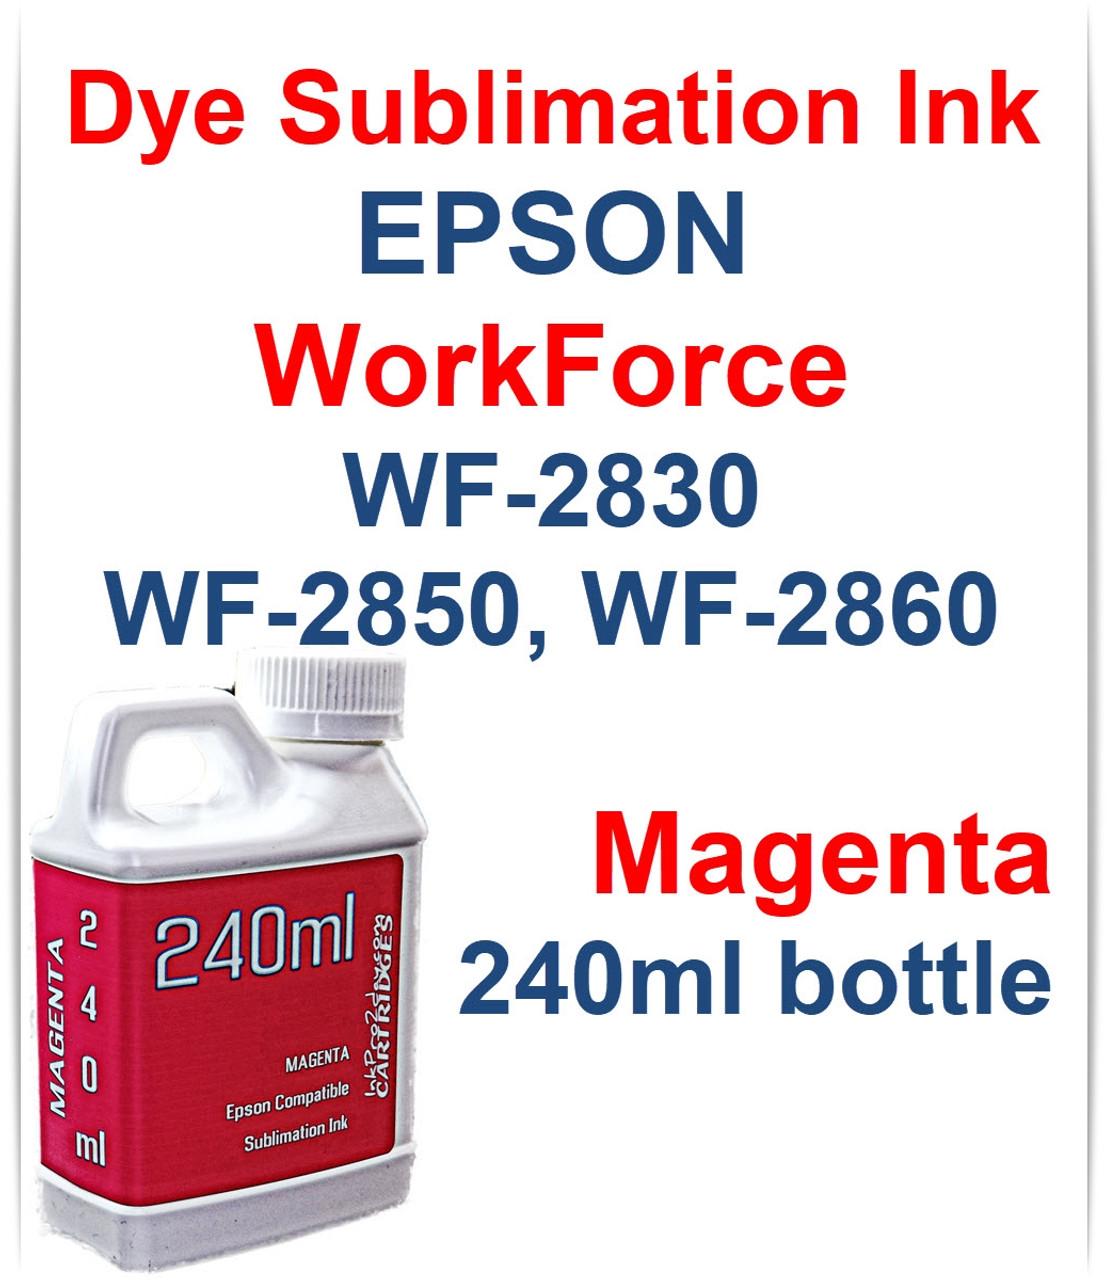 Magenta 240ml bottle Dye Sublimation Ink for Epson WorkForce WF-2830 WF-2850 WF-2860 Printers